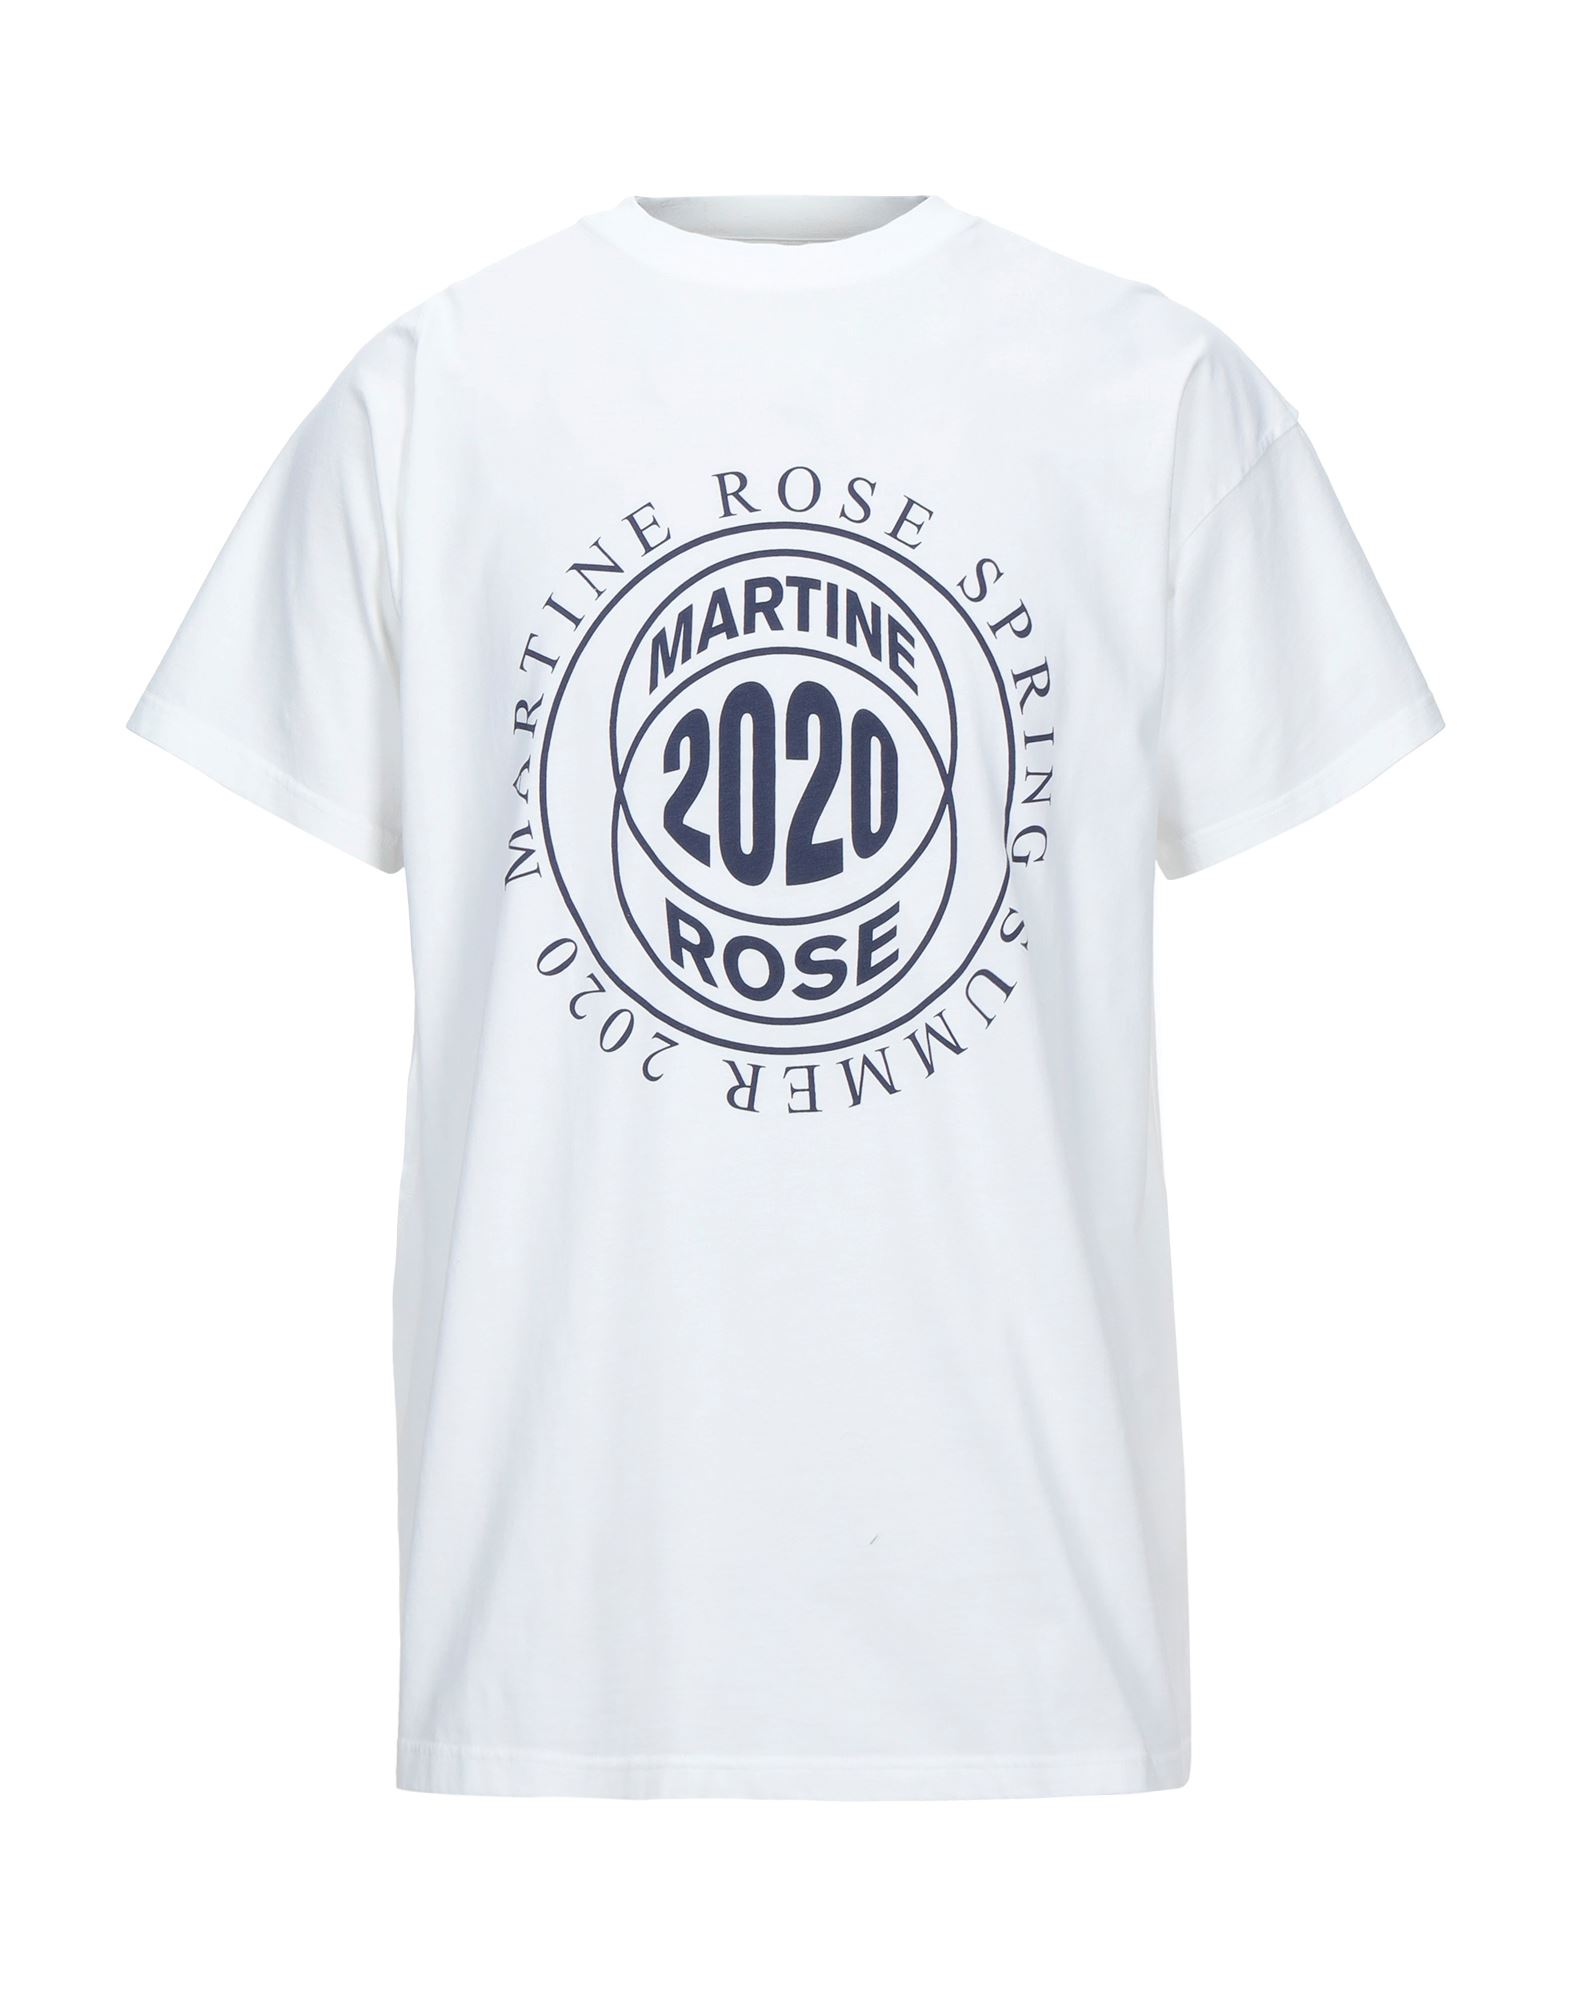 MARTINE ROSE T-shirts - Item 12520215